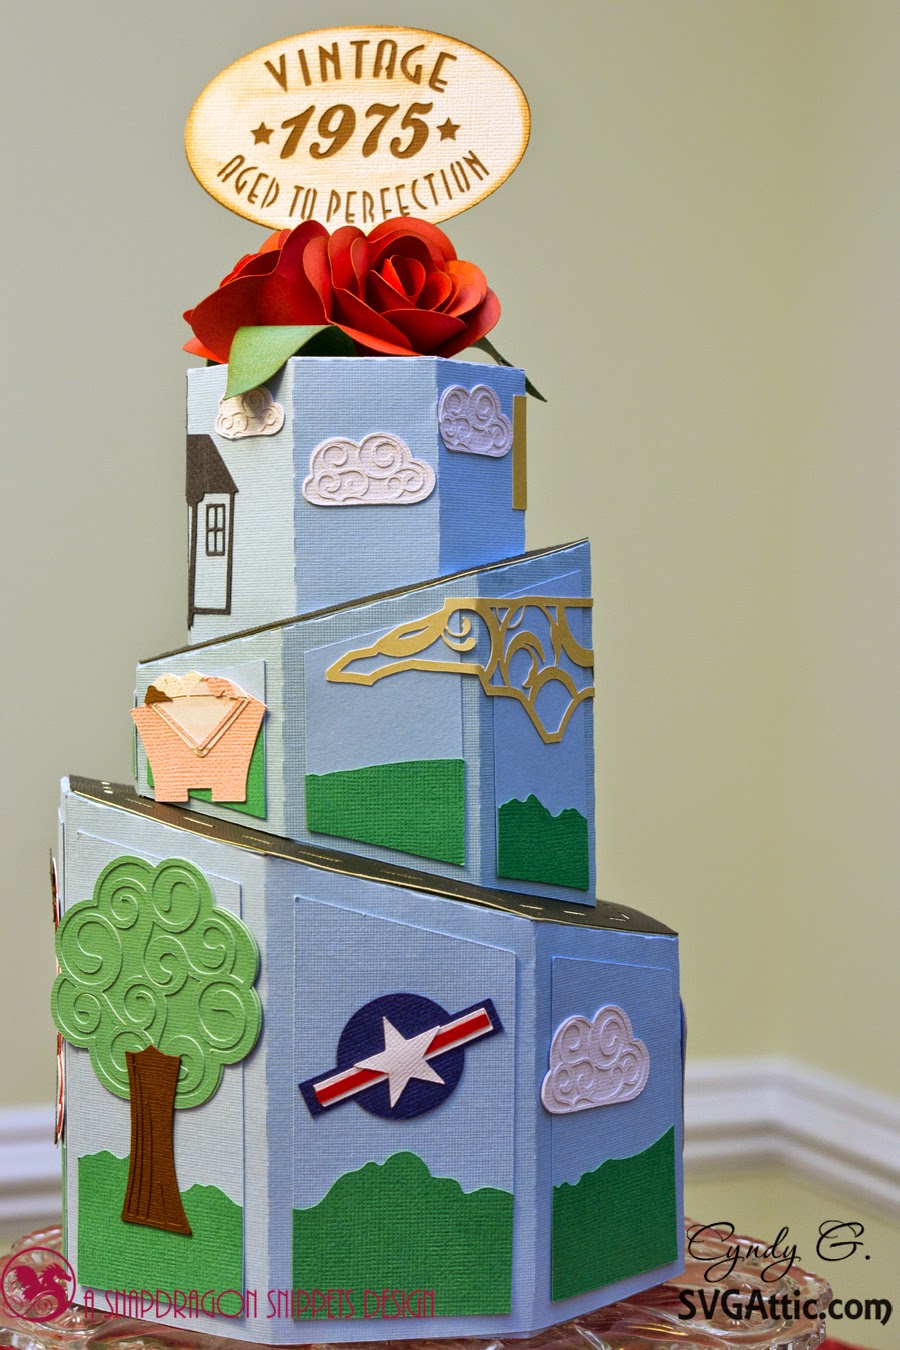 3d paper cake with life milestones i.e. born, wedding, children, etc.